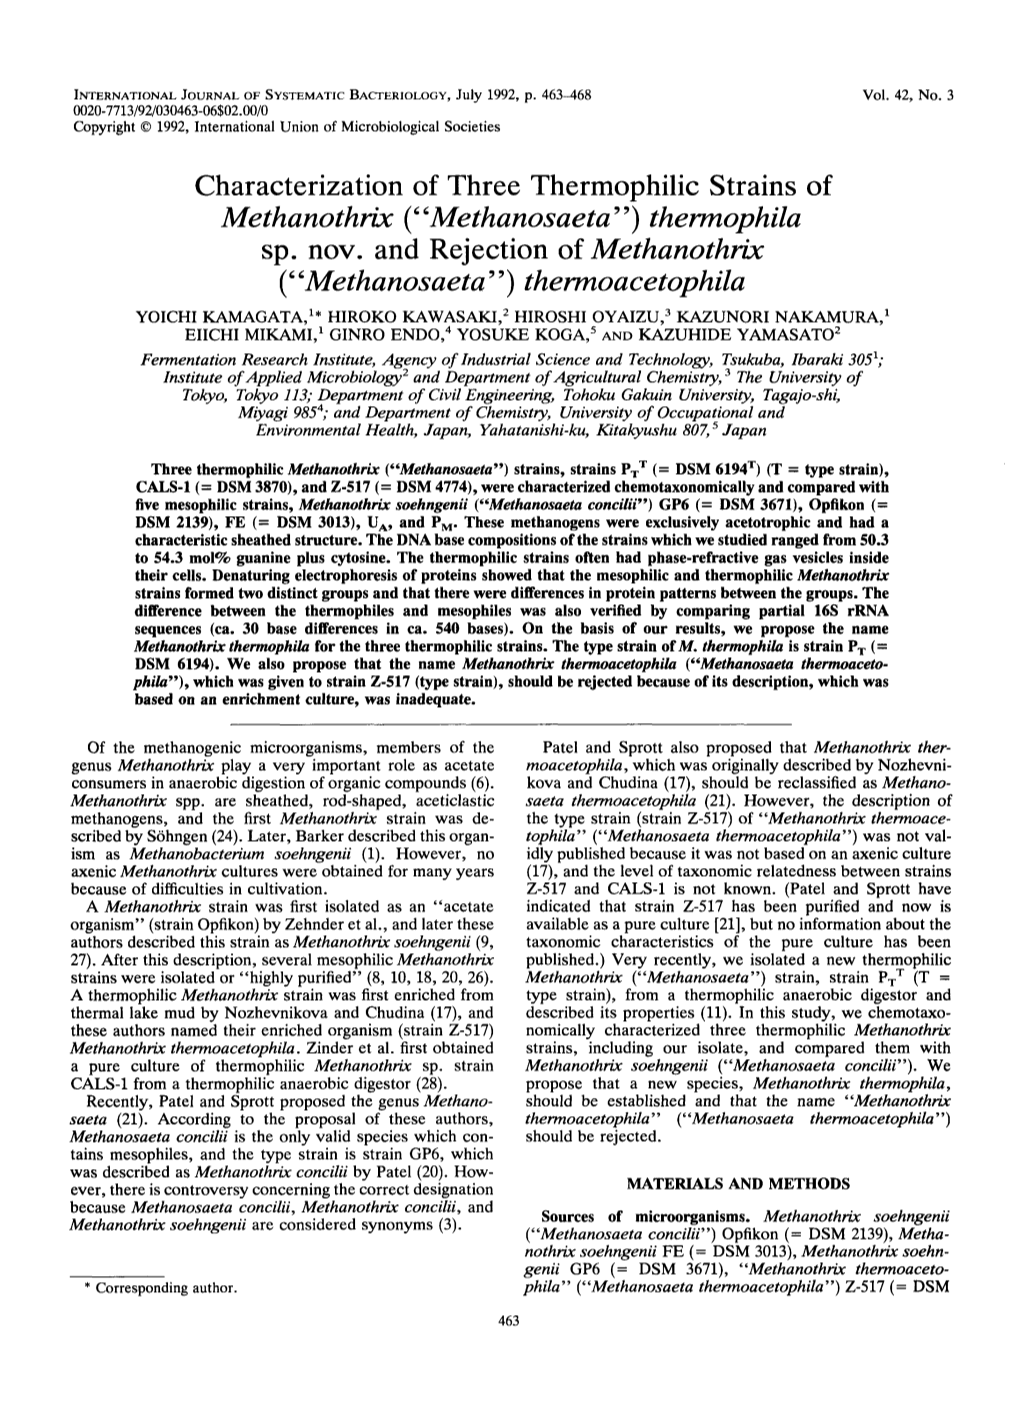 Methanothrix (“Methanosaeta